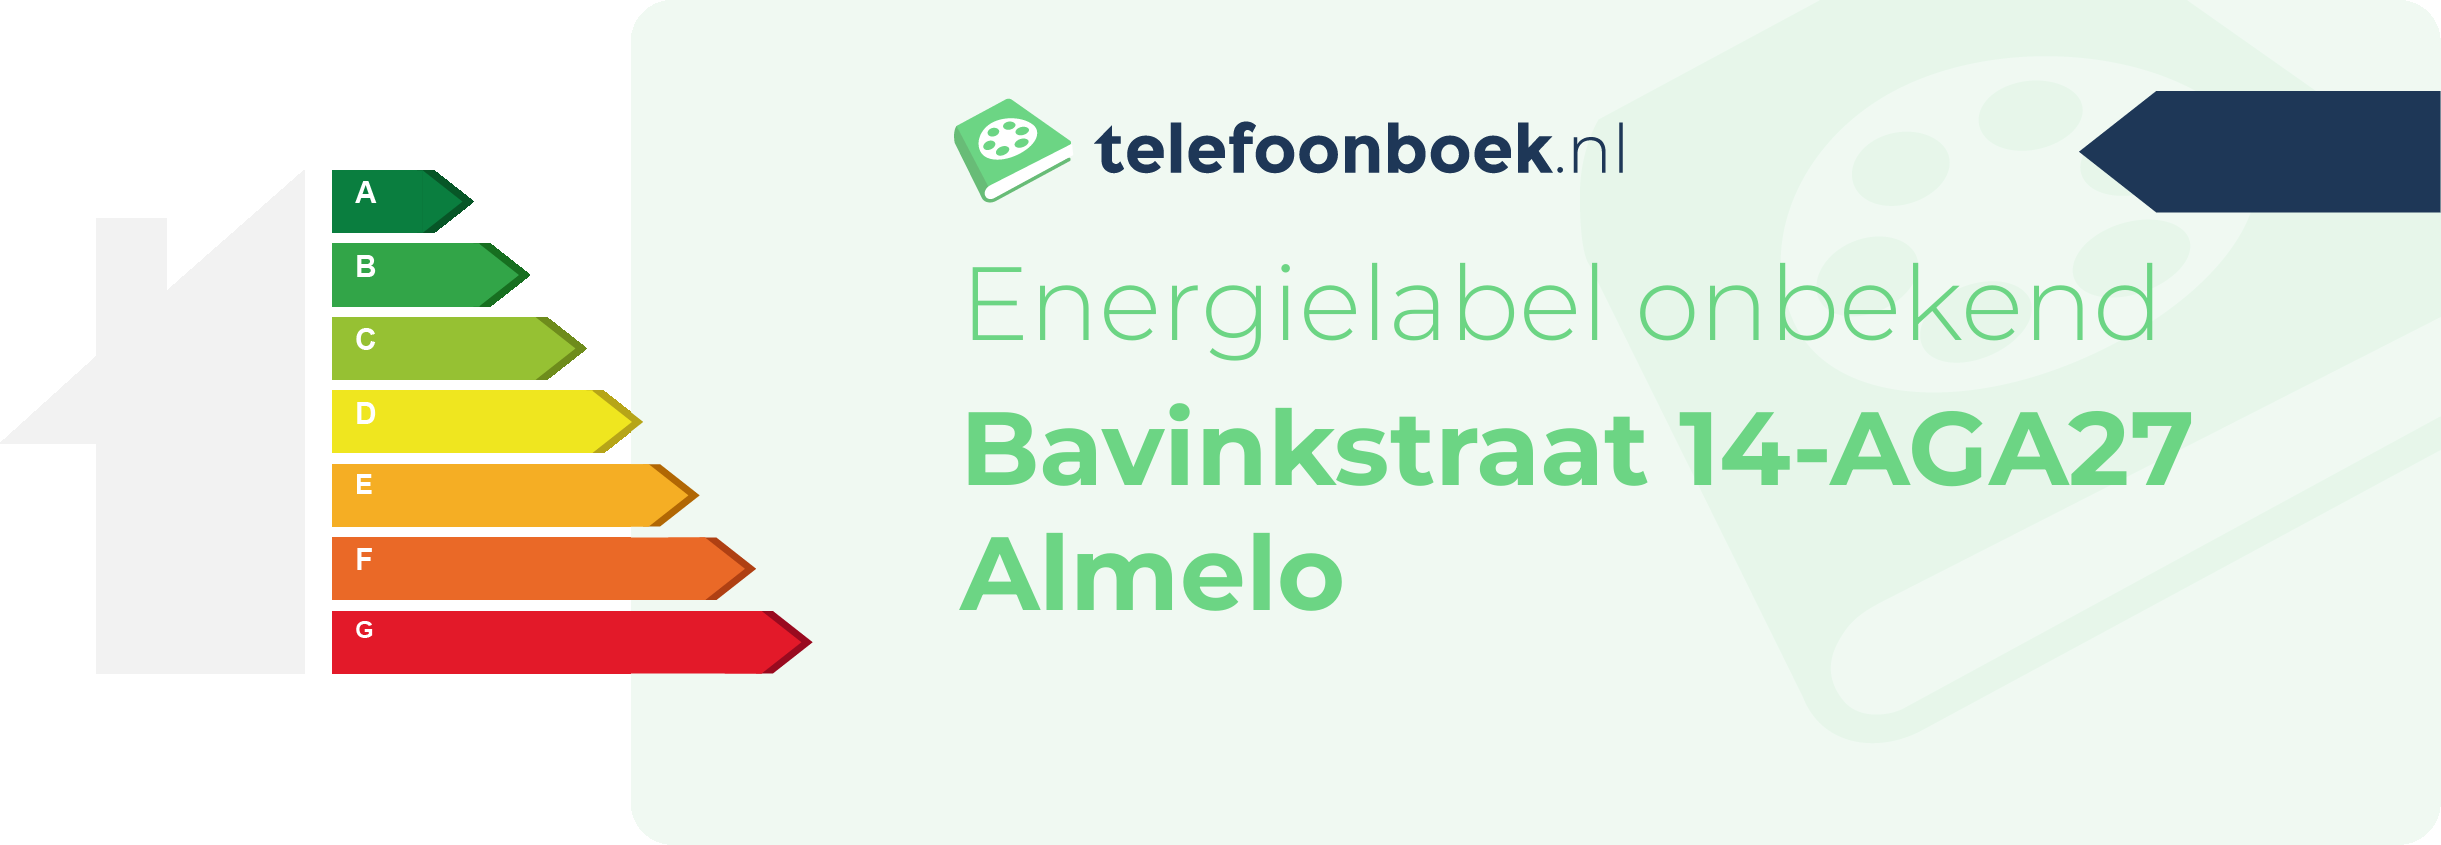 Energielabel Bavinkstraat 14-AGA27 Almelo